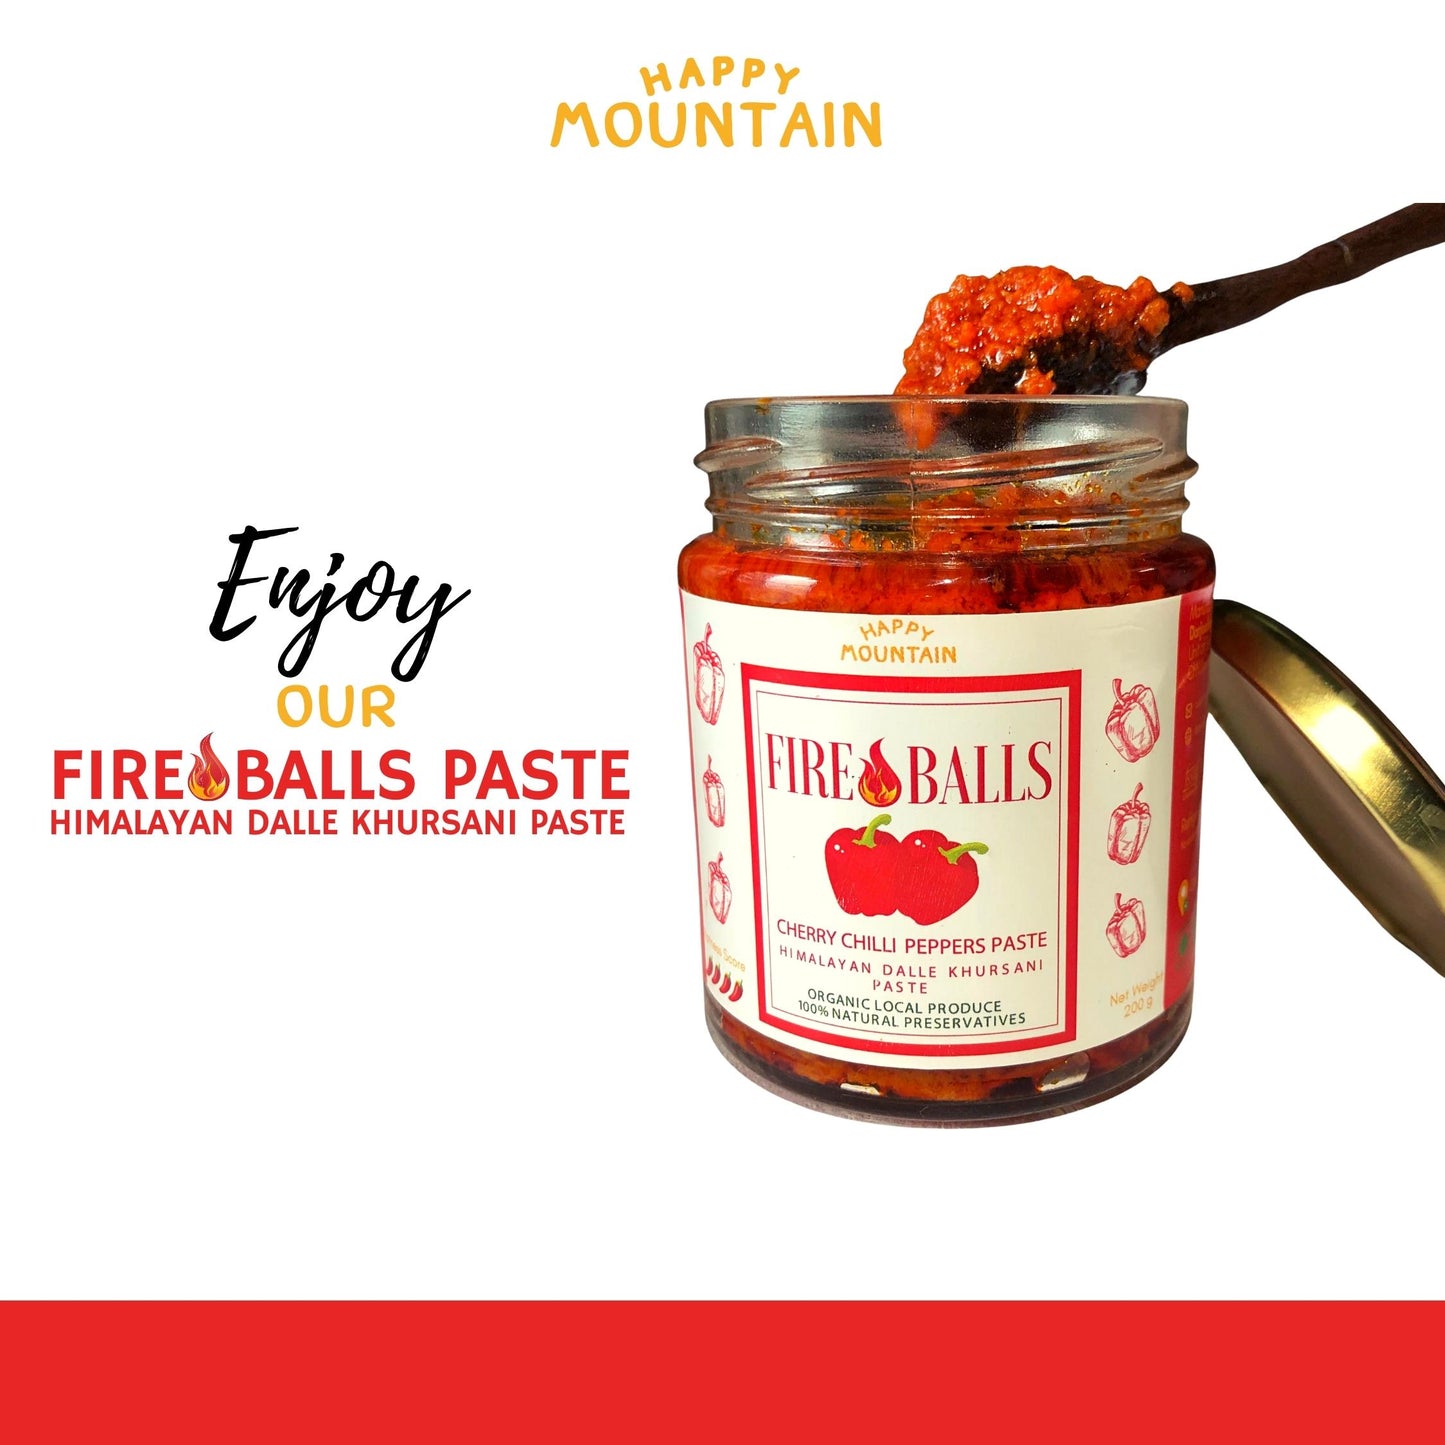 Fireballs Cherry Chilli Peppers (Dalle) Paste - Happy Mountain